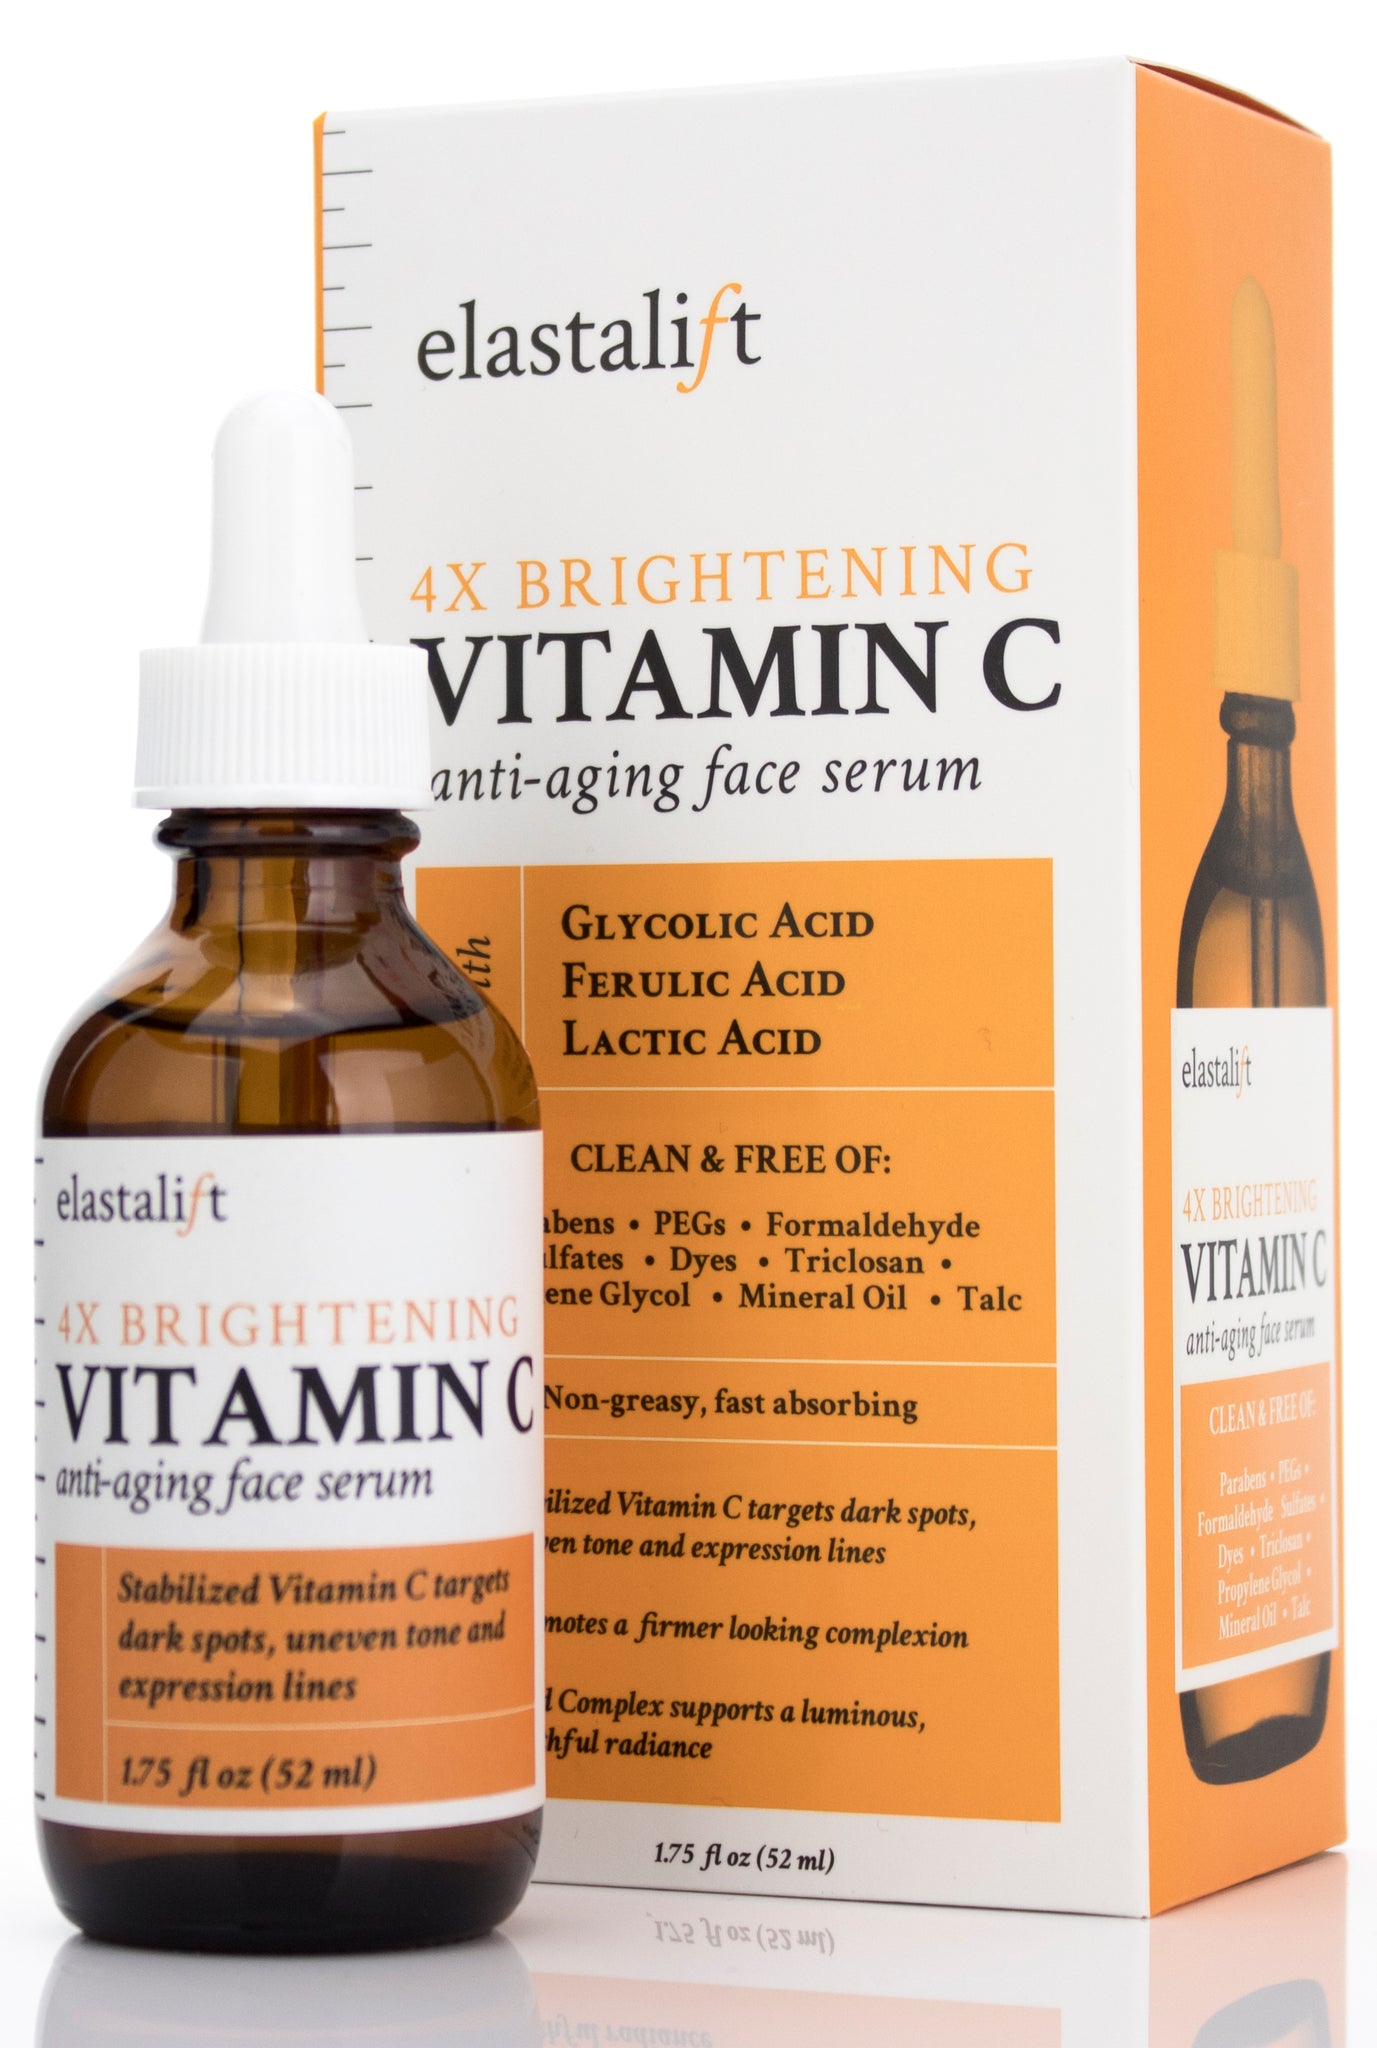 Elastalift Vitamin C Serum for Age Spots, Wrinkles, & Expression Lines. Anti-Aging Serum with Vitamin C Brightens Skin. 1.8 Fl Oz